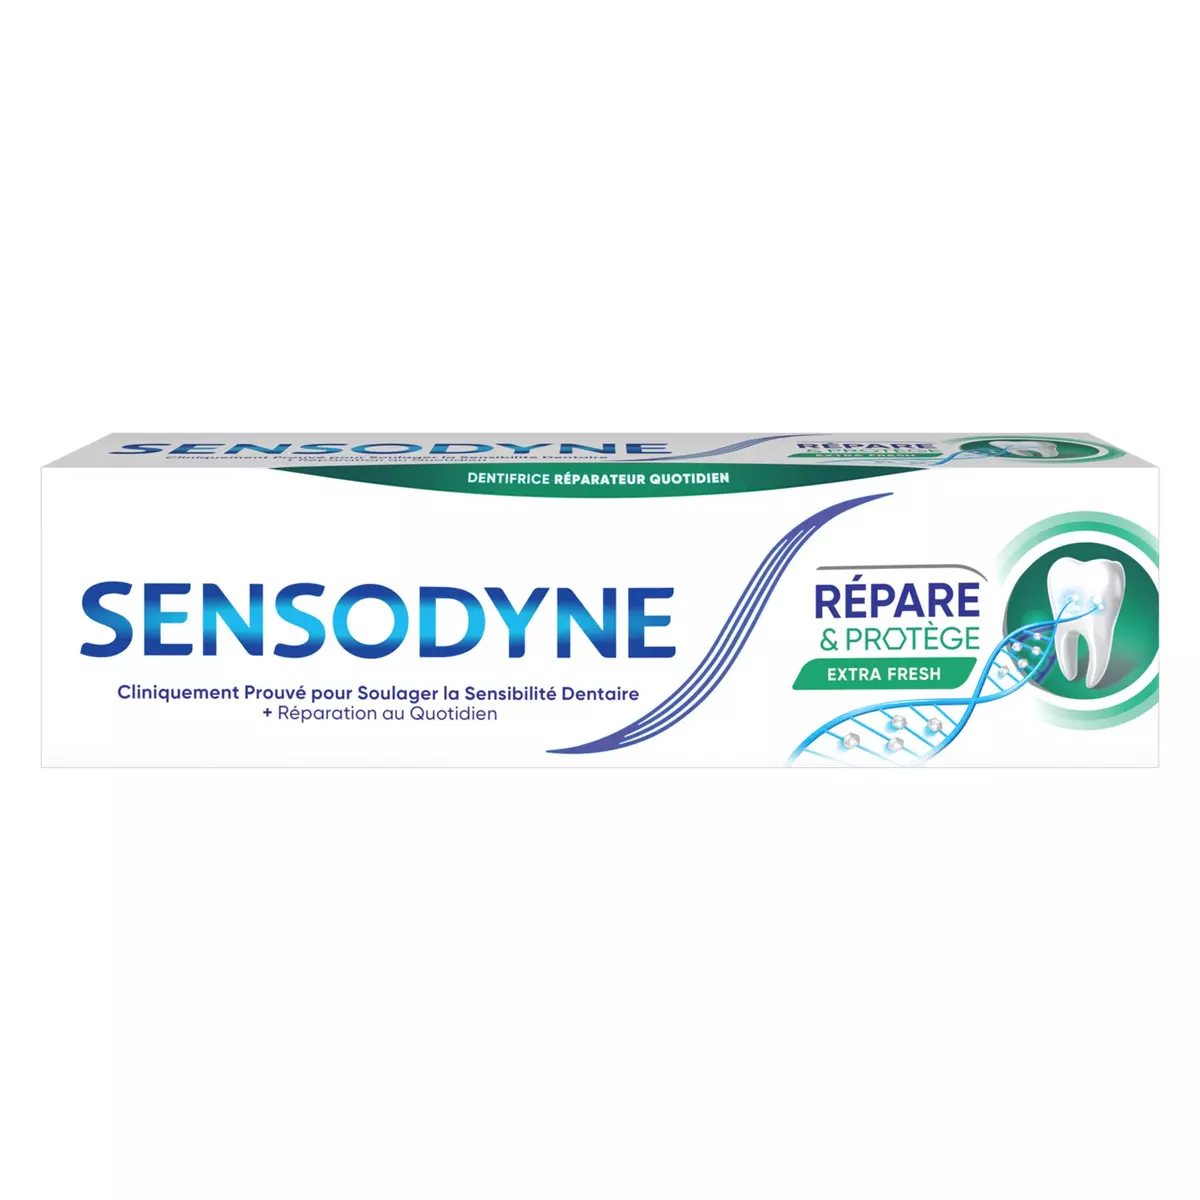 SENSODYNE Dentifrice repare protège extra fresh 75ml